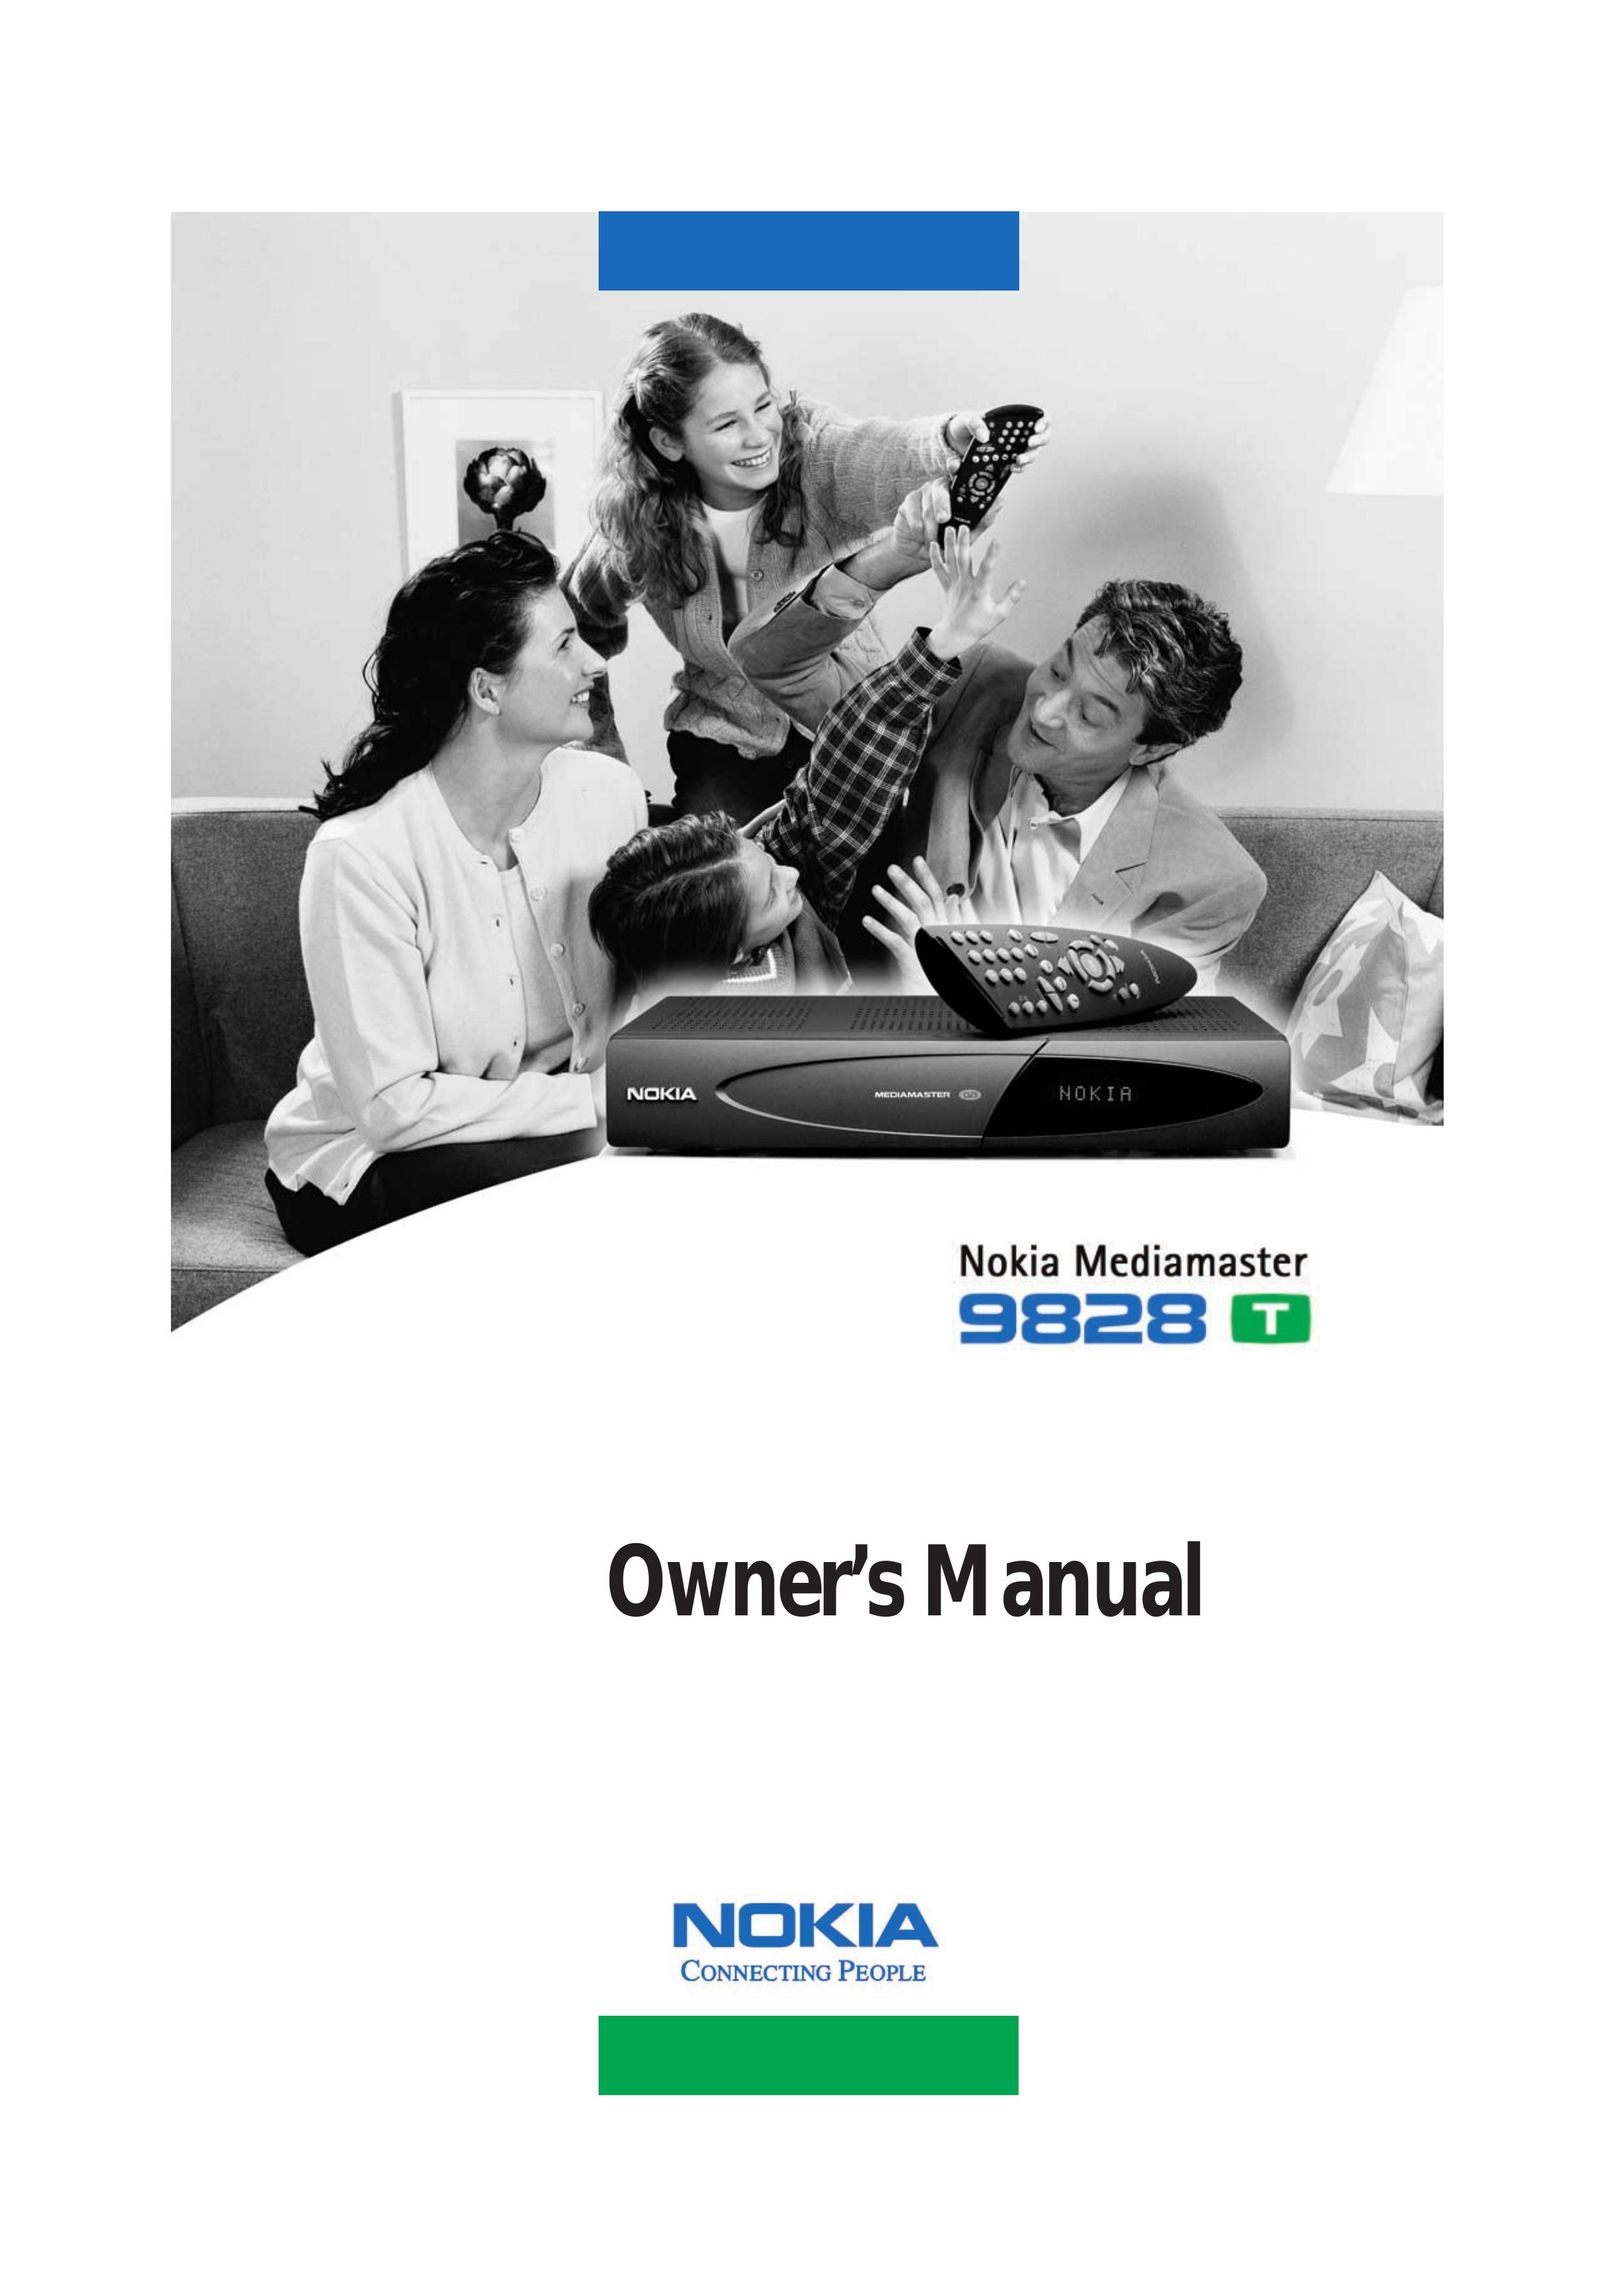 Nokia 9828 Satellite TV System User Manual